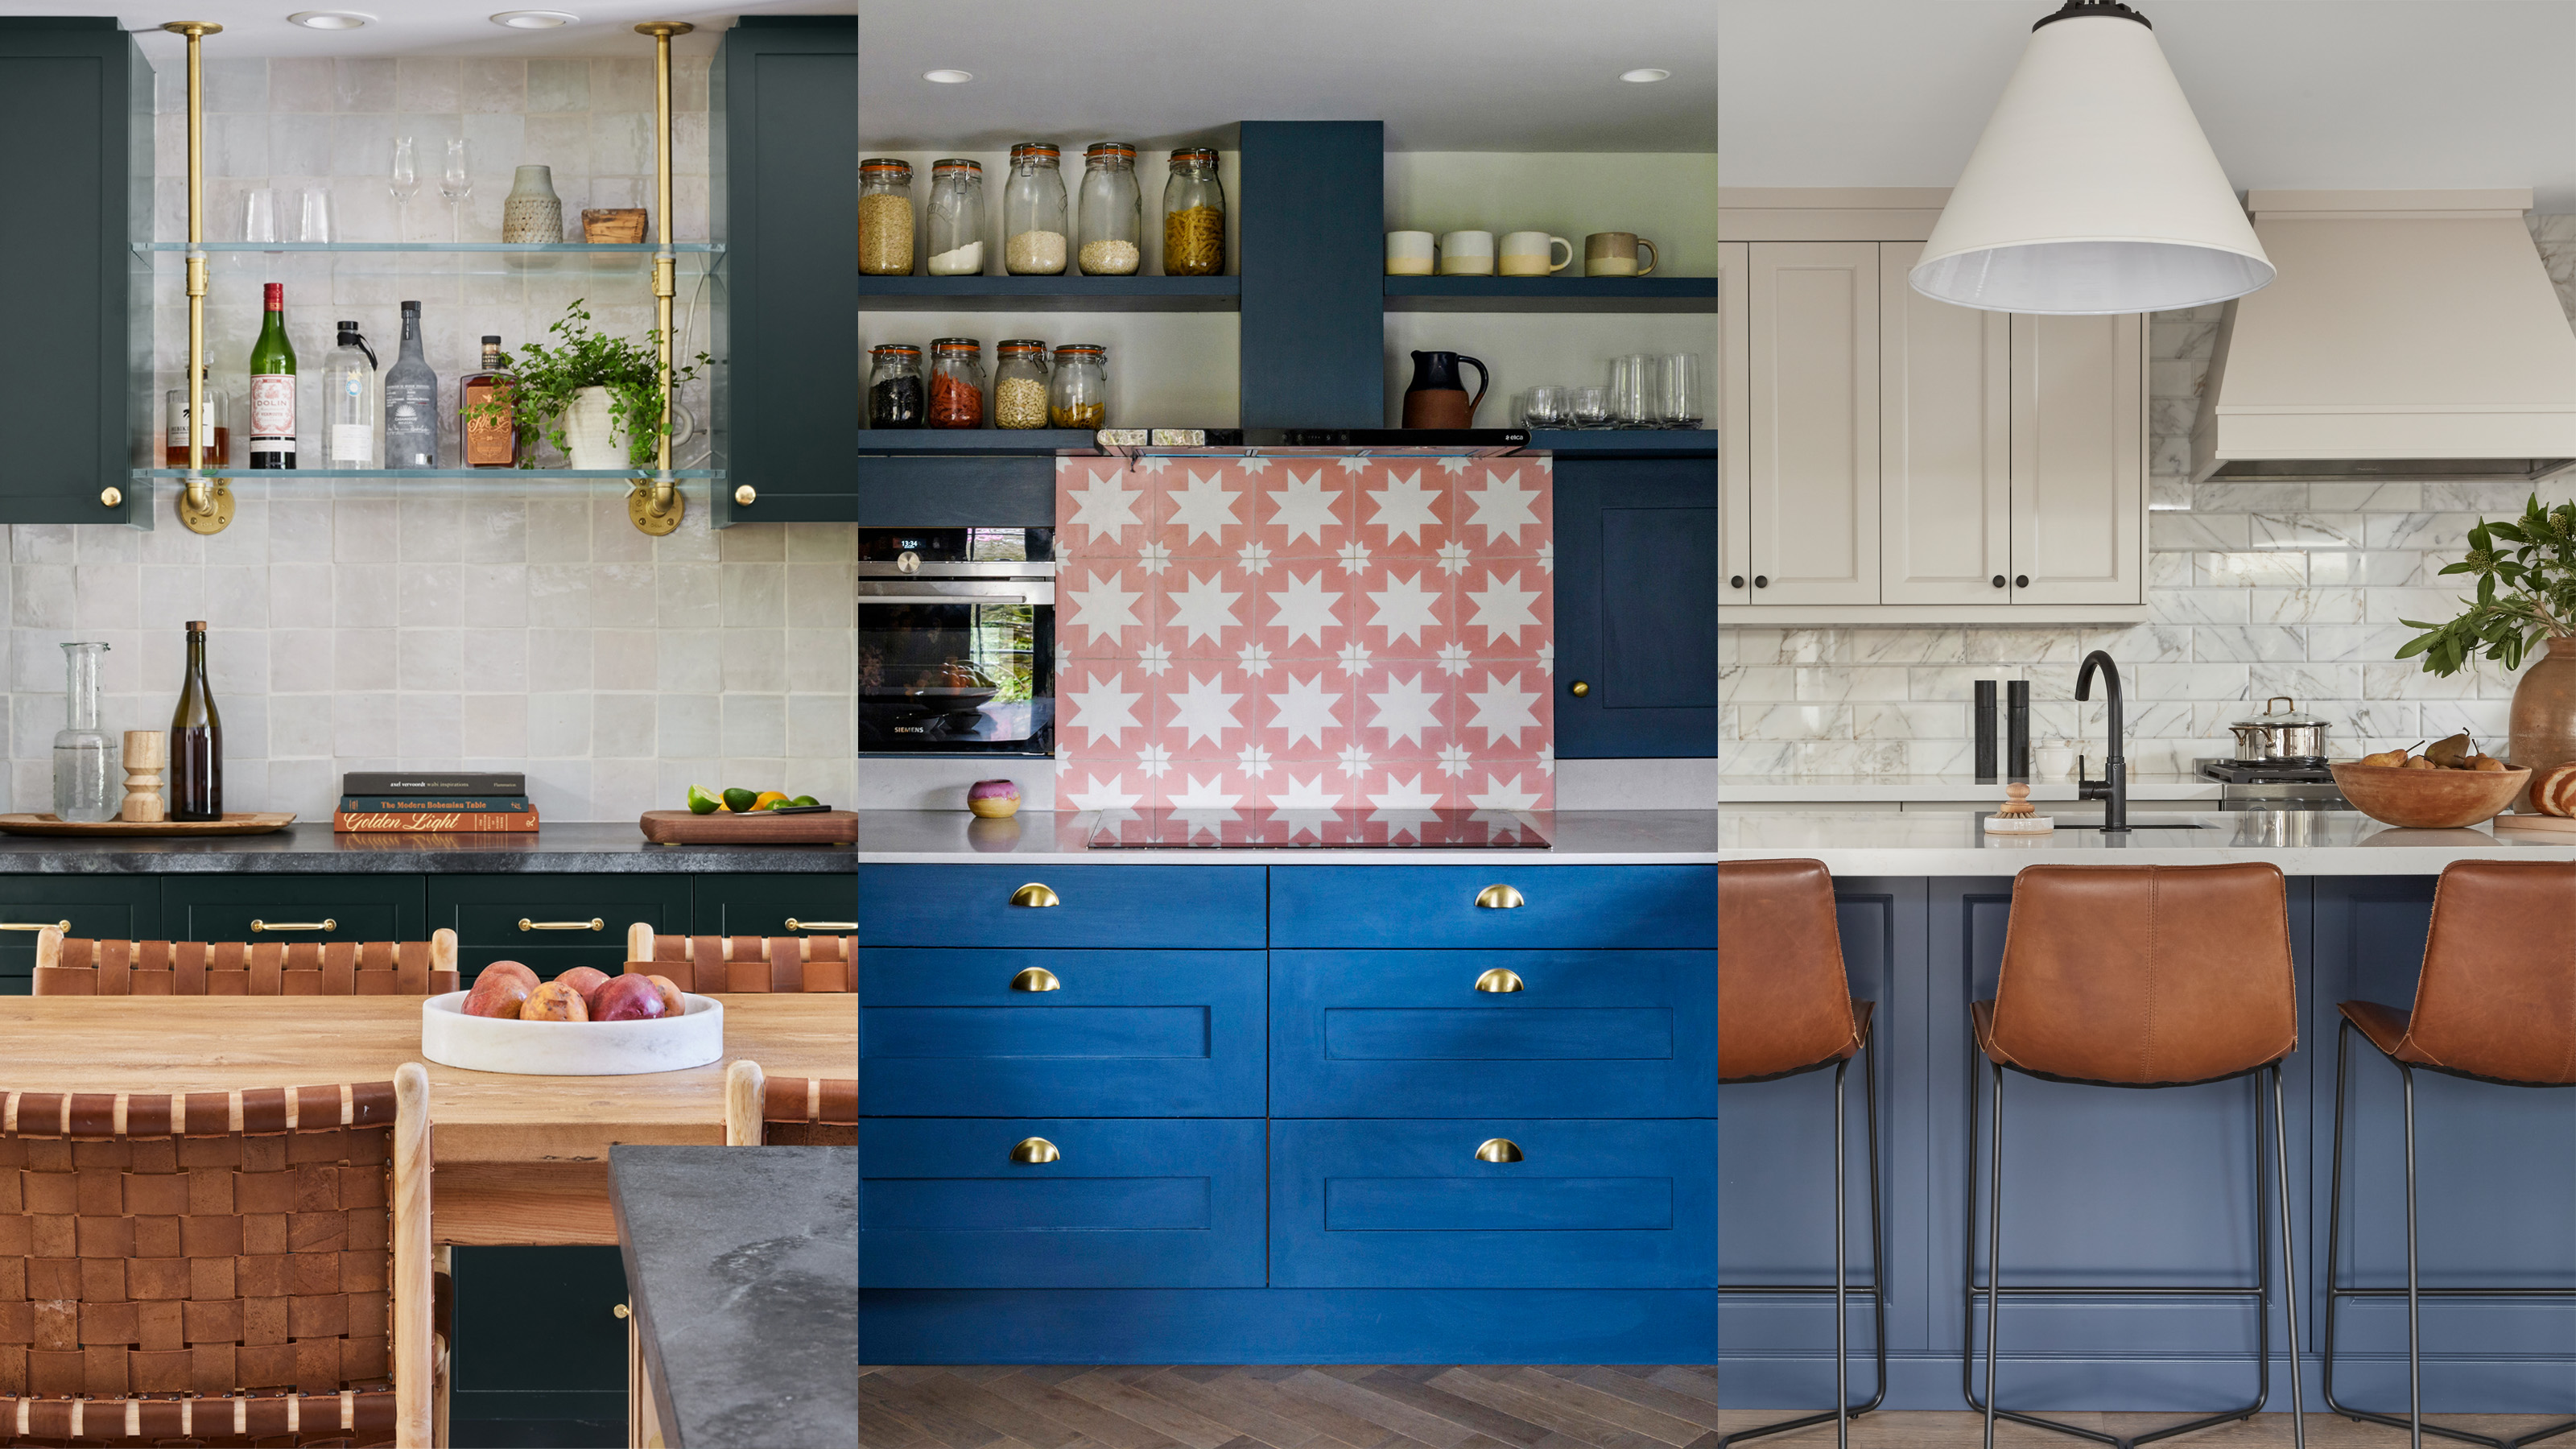 Backsplash ideas for kitchens 18 tips for all design styles ...